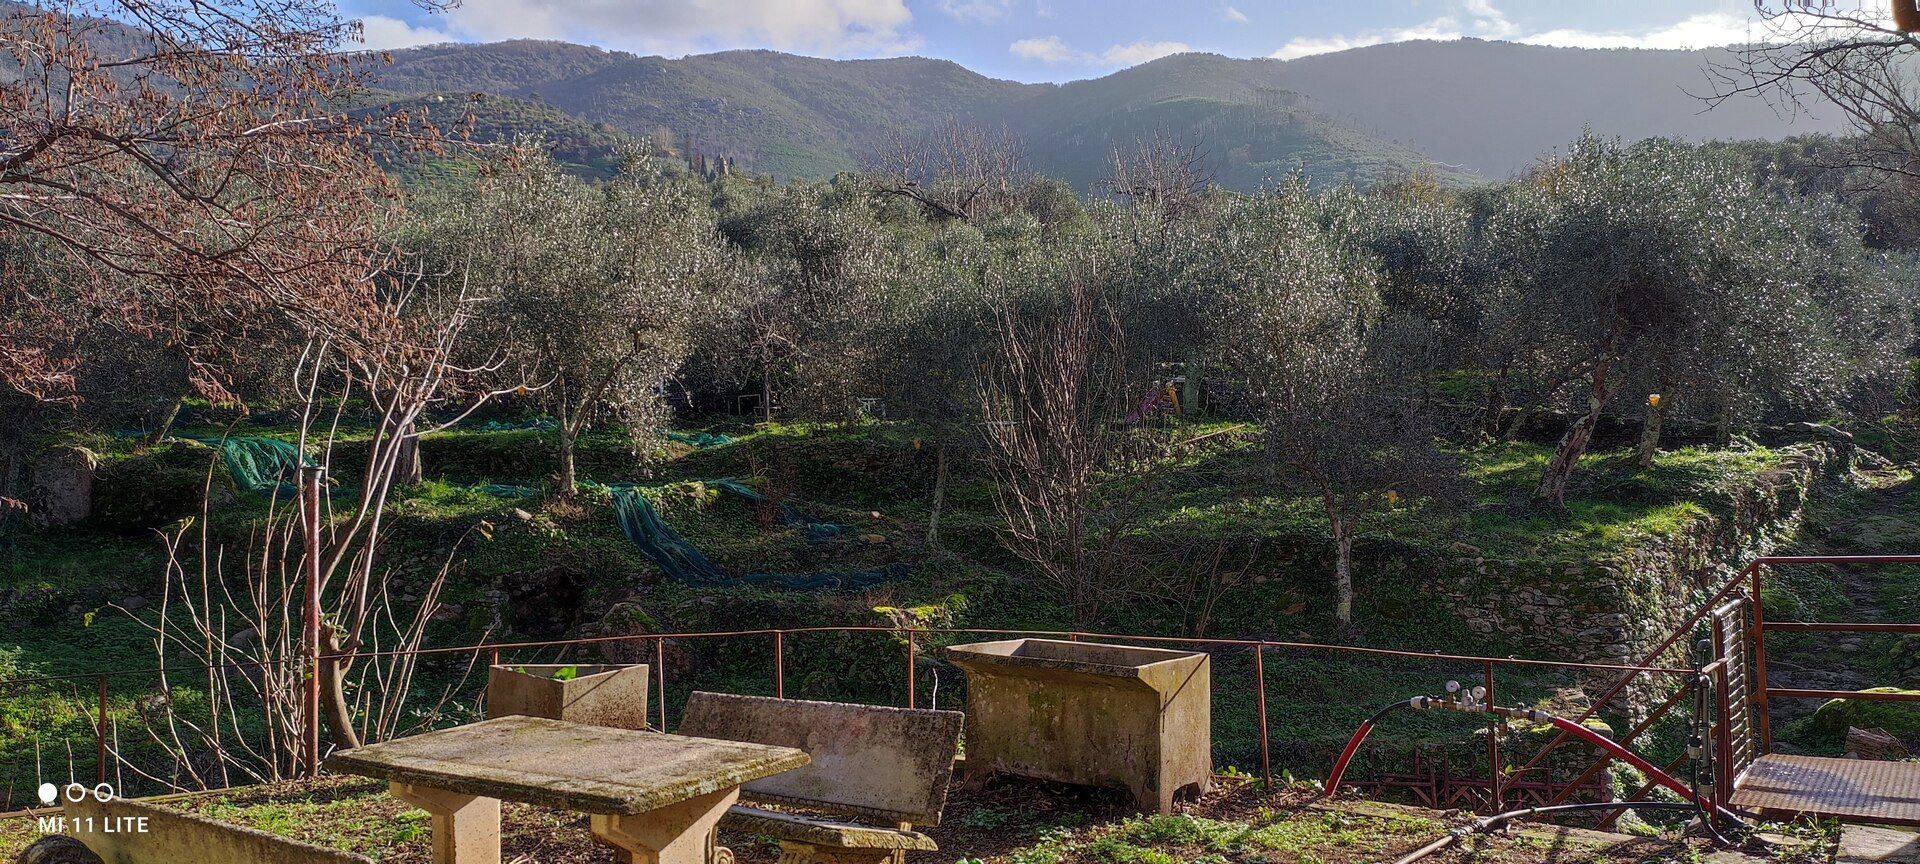 Vendita loft in zona tranquilla Calci Toscana